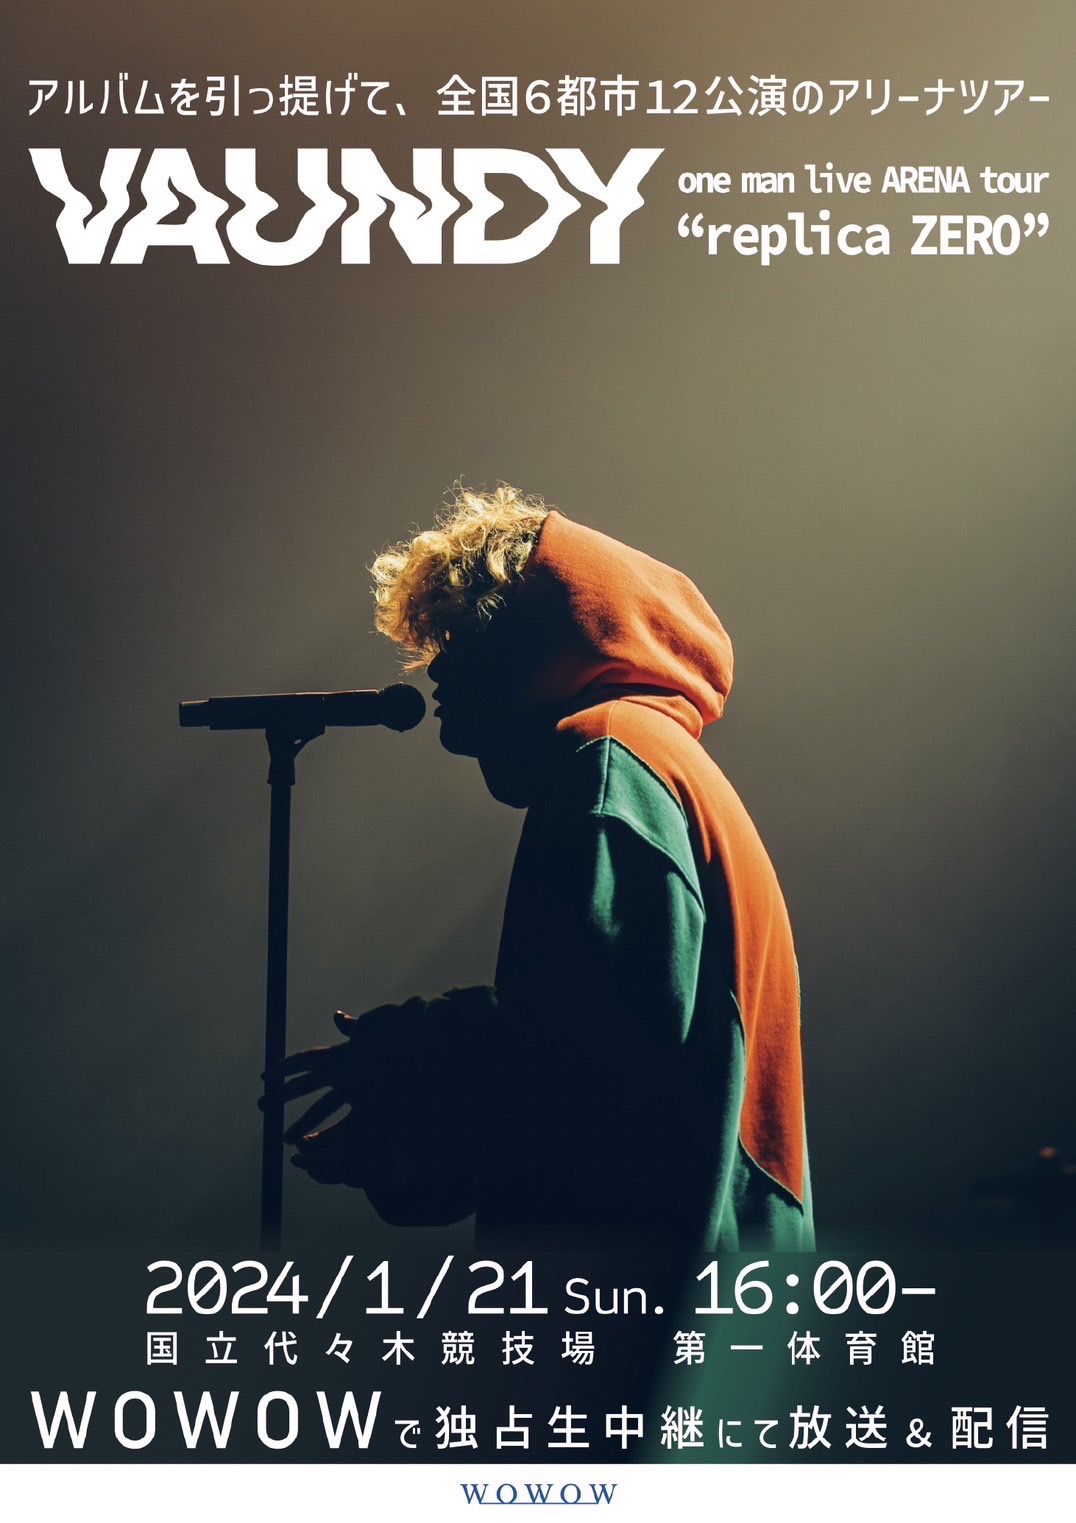 Vaundy one man live ARENA tour 